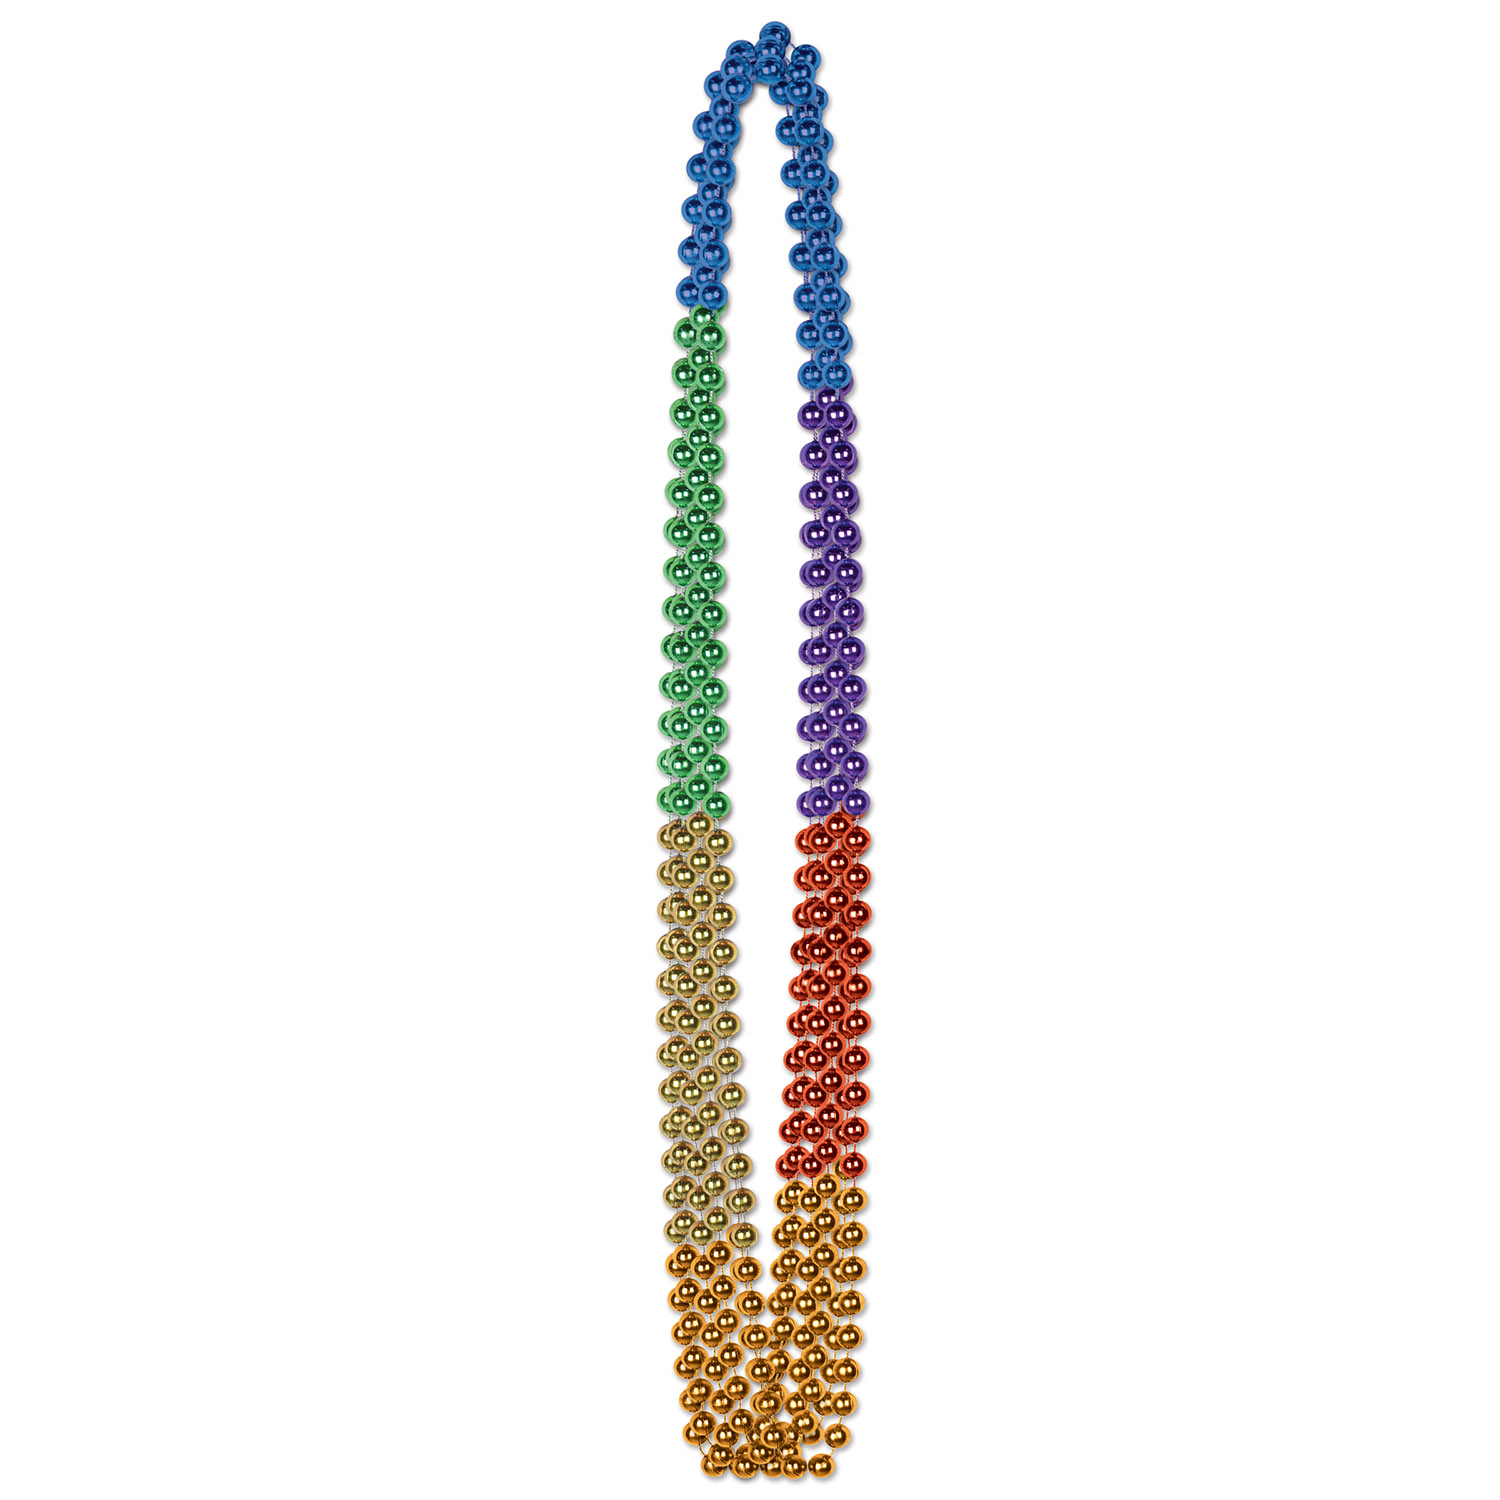 12 Wholesale Rainbow Beads